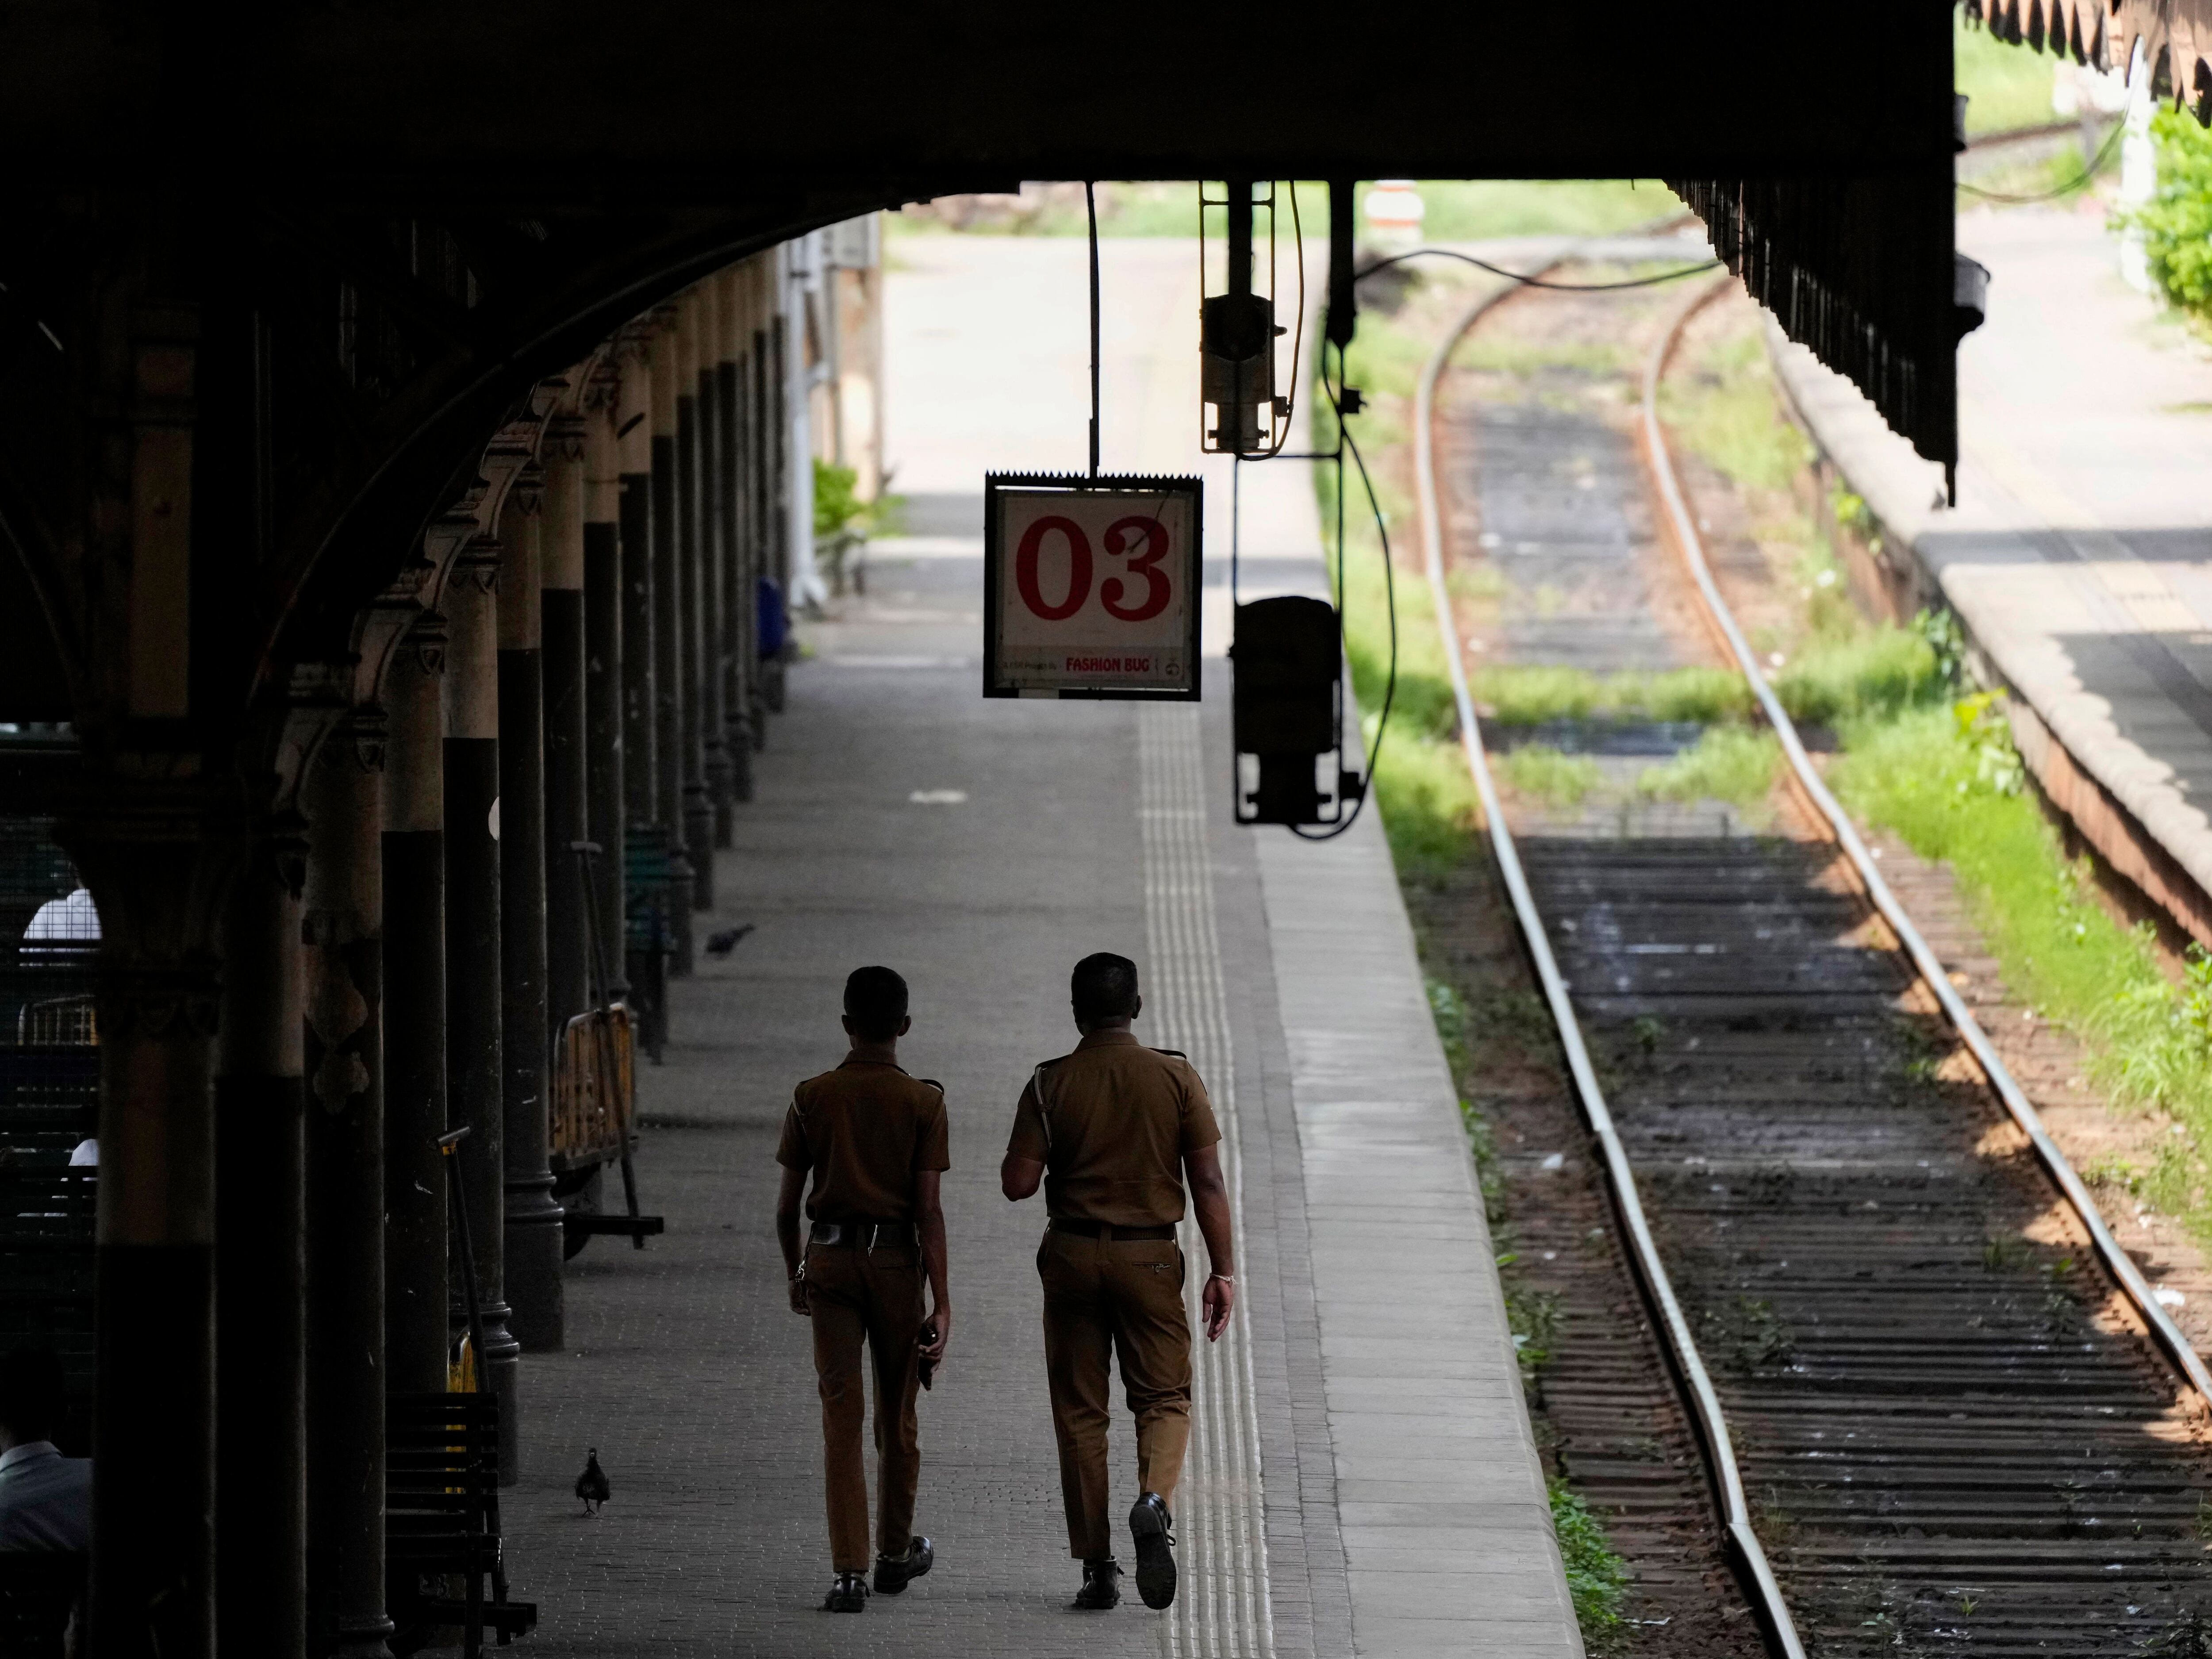 Sri Lanka train strike leaves tens of thousands of commuters stranded